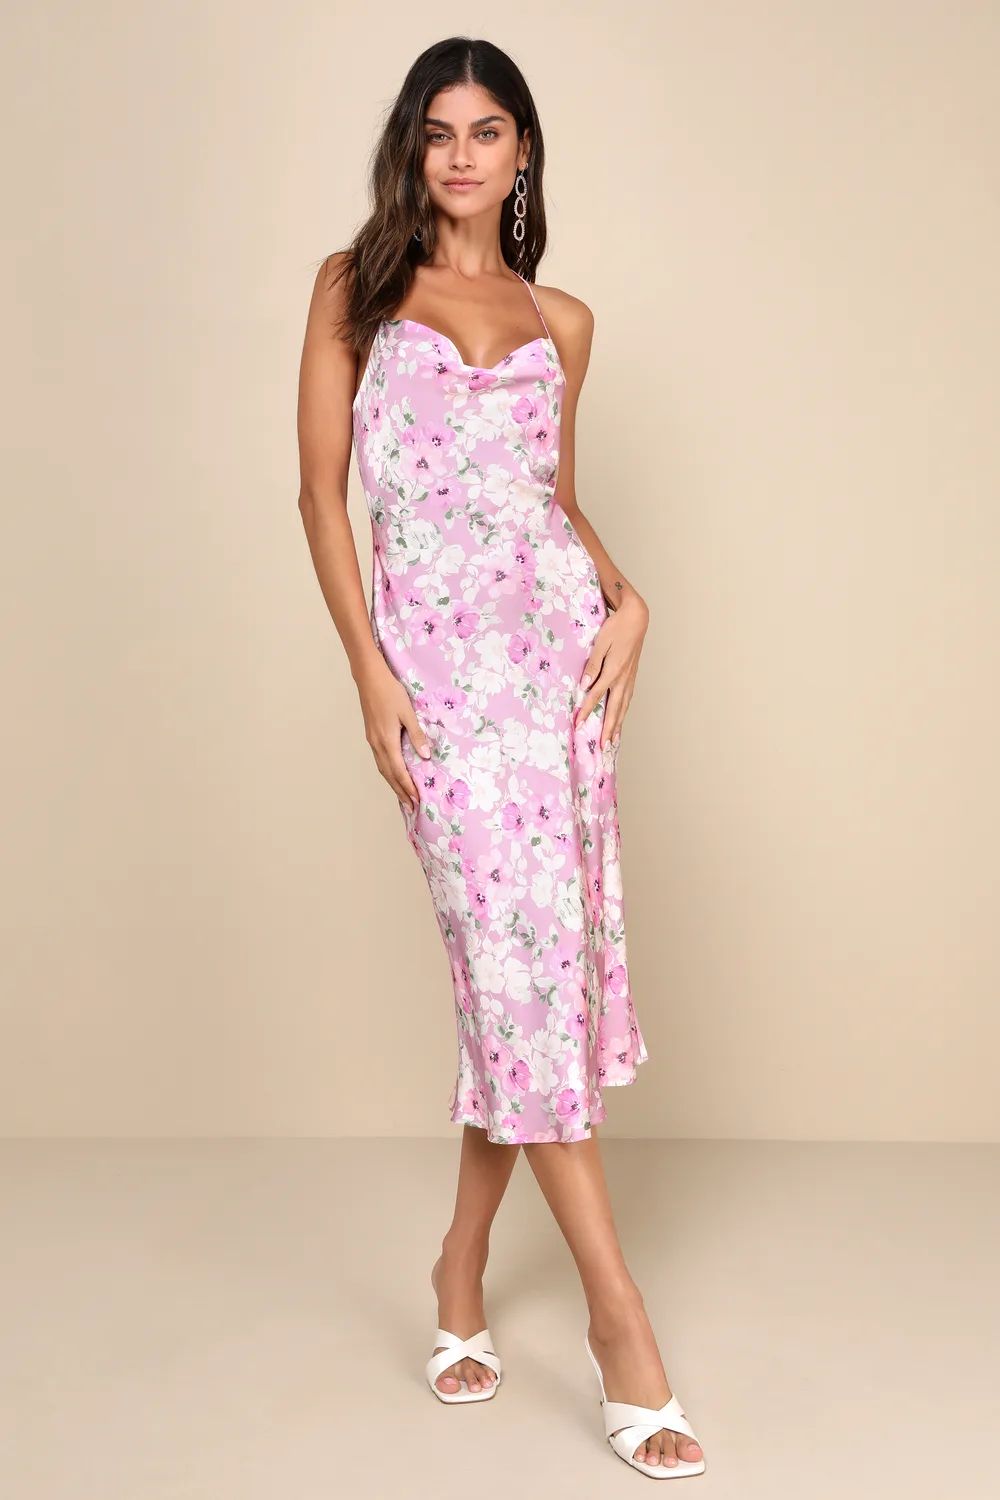 Impressive Delight Mauve Pink Floral Backless Midi Slip Dress | Lulus